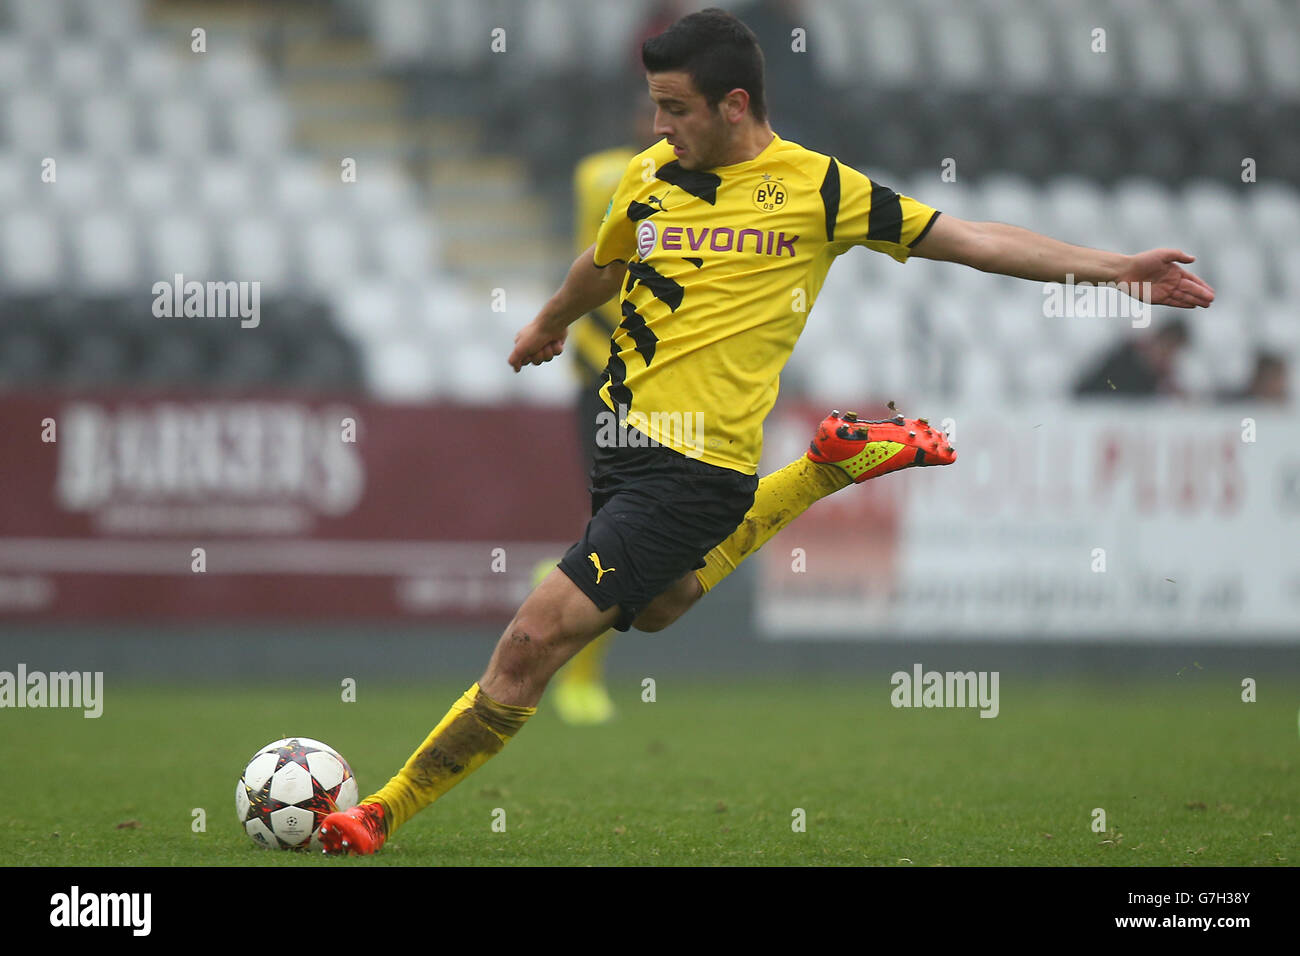 Soccer - UEFA Youth League - Group D - Arsenal v Borussia Dortmund - Borehamwood. Mehmet Alp jurt, Borussia Dortmund. Stock Photo